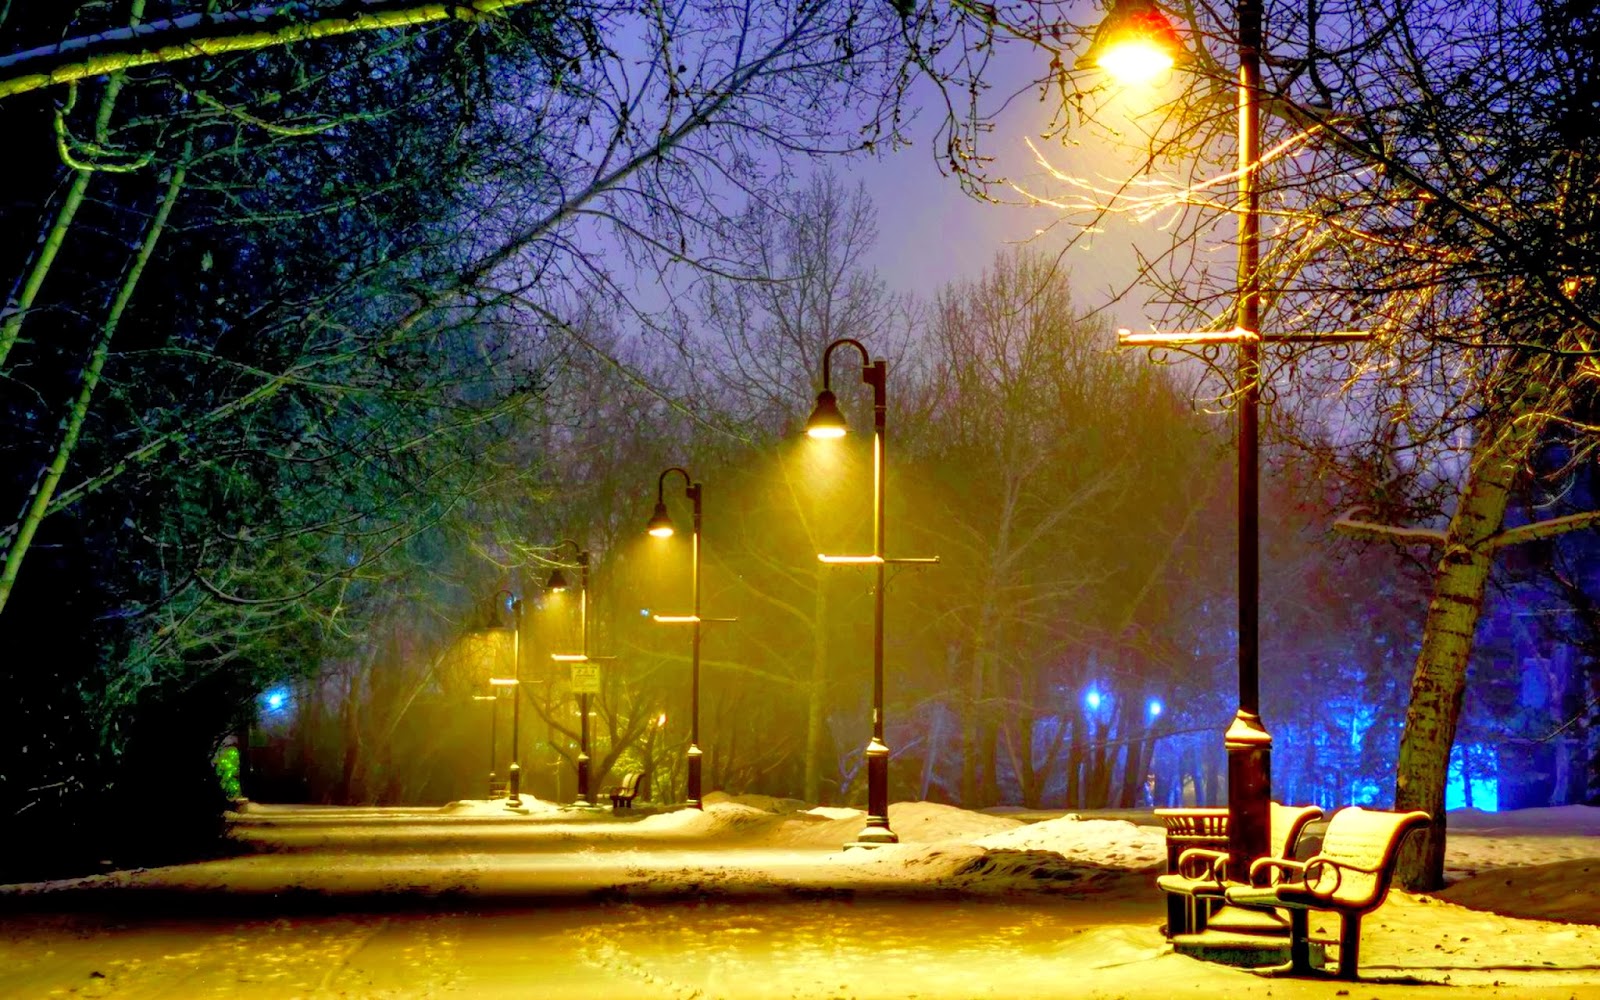 Missing Beats of Life: Winter Season At Night HD Wallpaper